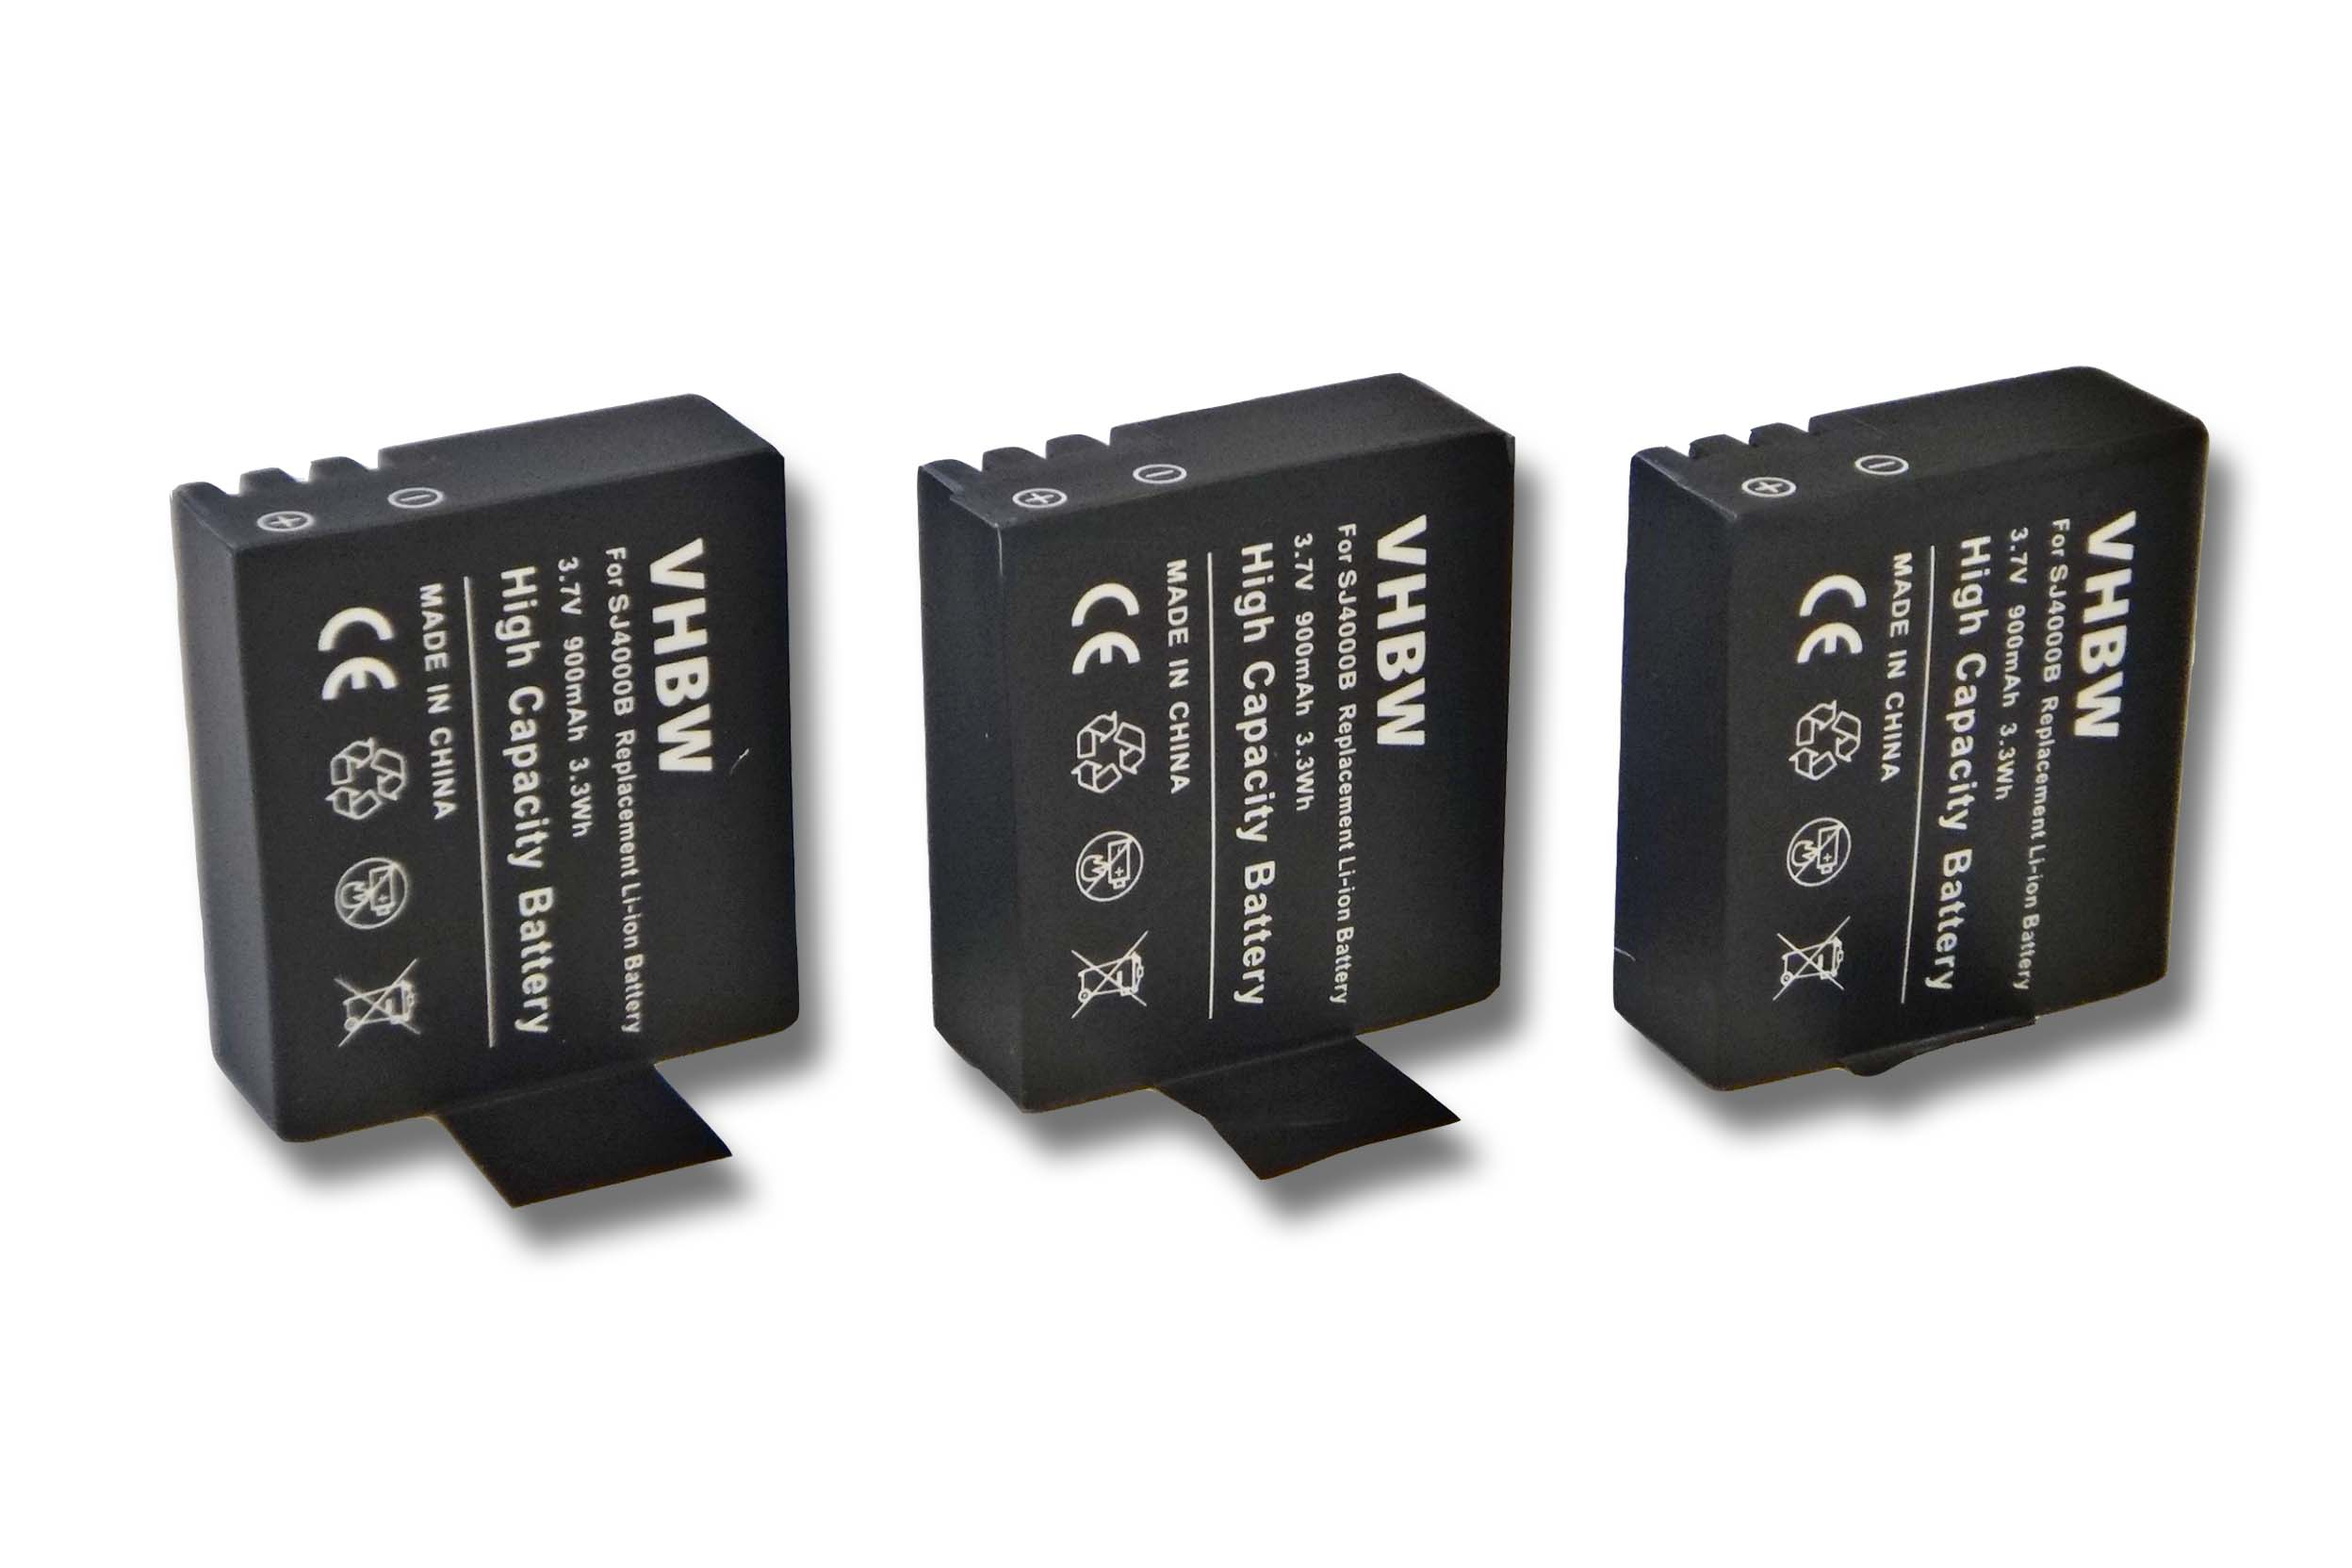 VHBW kompatibel mit Sjcam 900 Li-Ion Volt, 288812, 288813, DX288812, M10 Videokamera, Akku - DX DX DX288813, 3.7